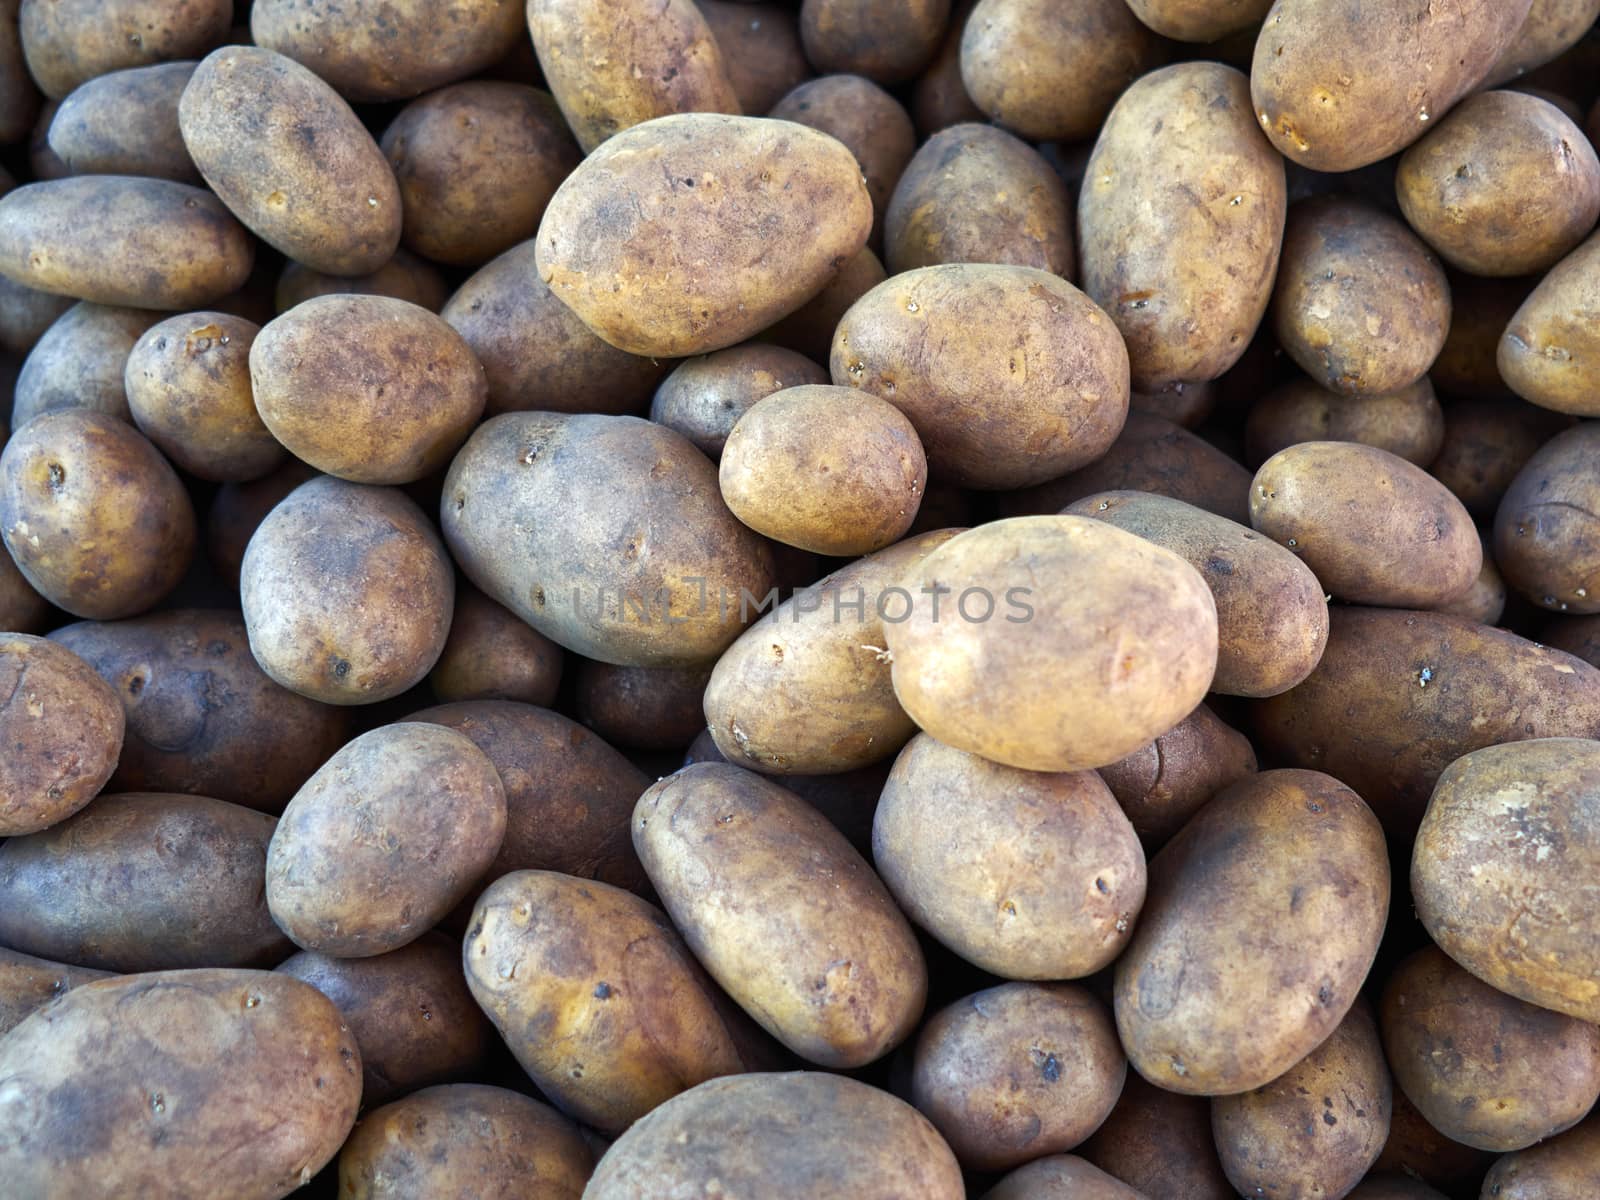 Fresh organic potatoes by Ronyzmbow